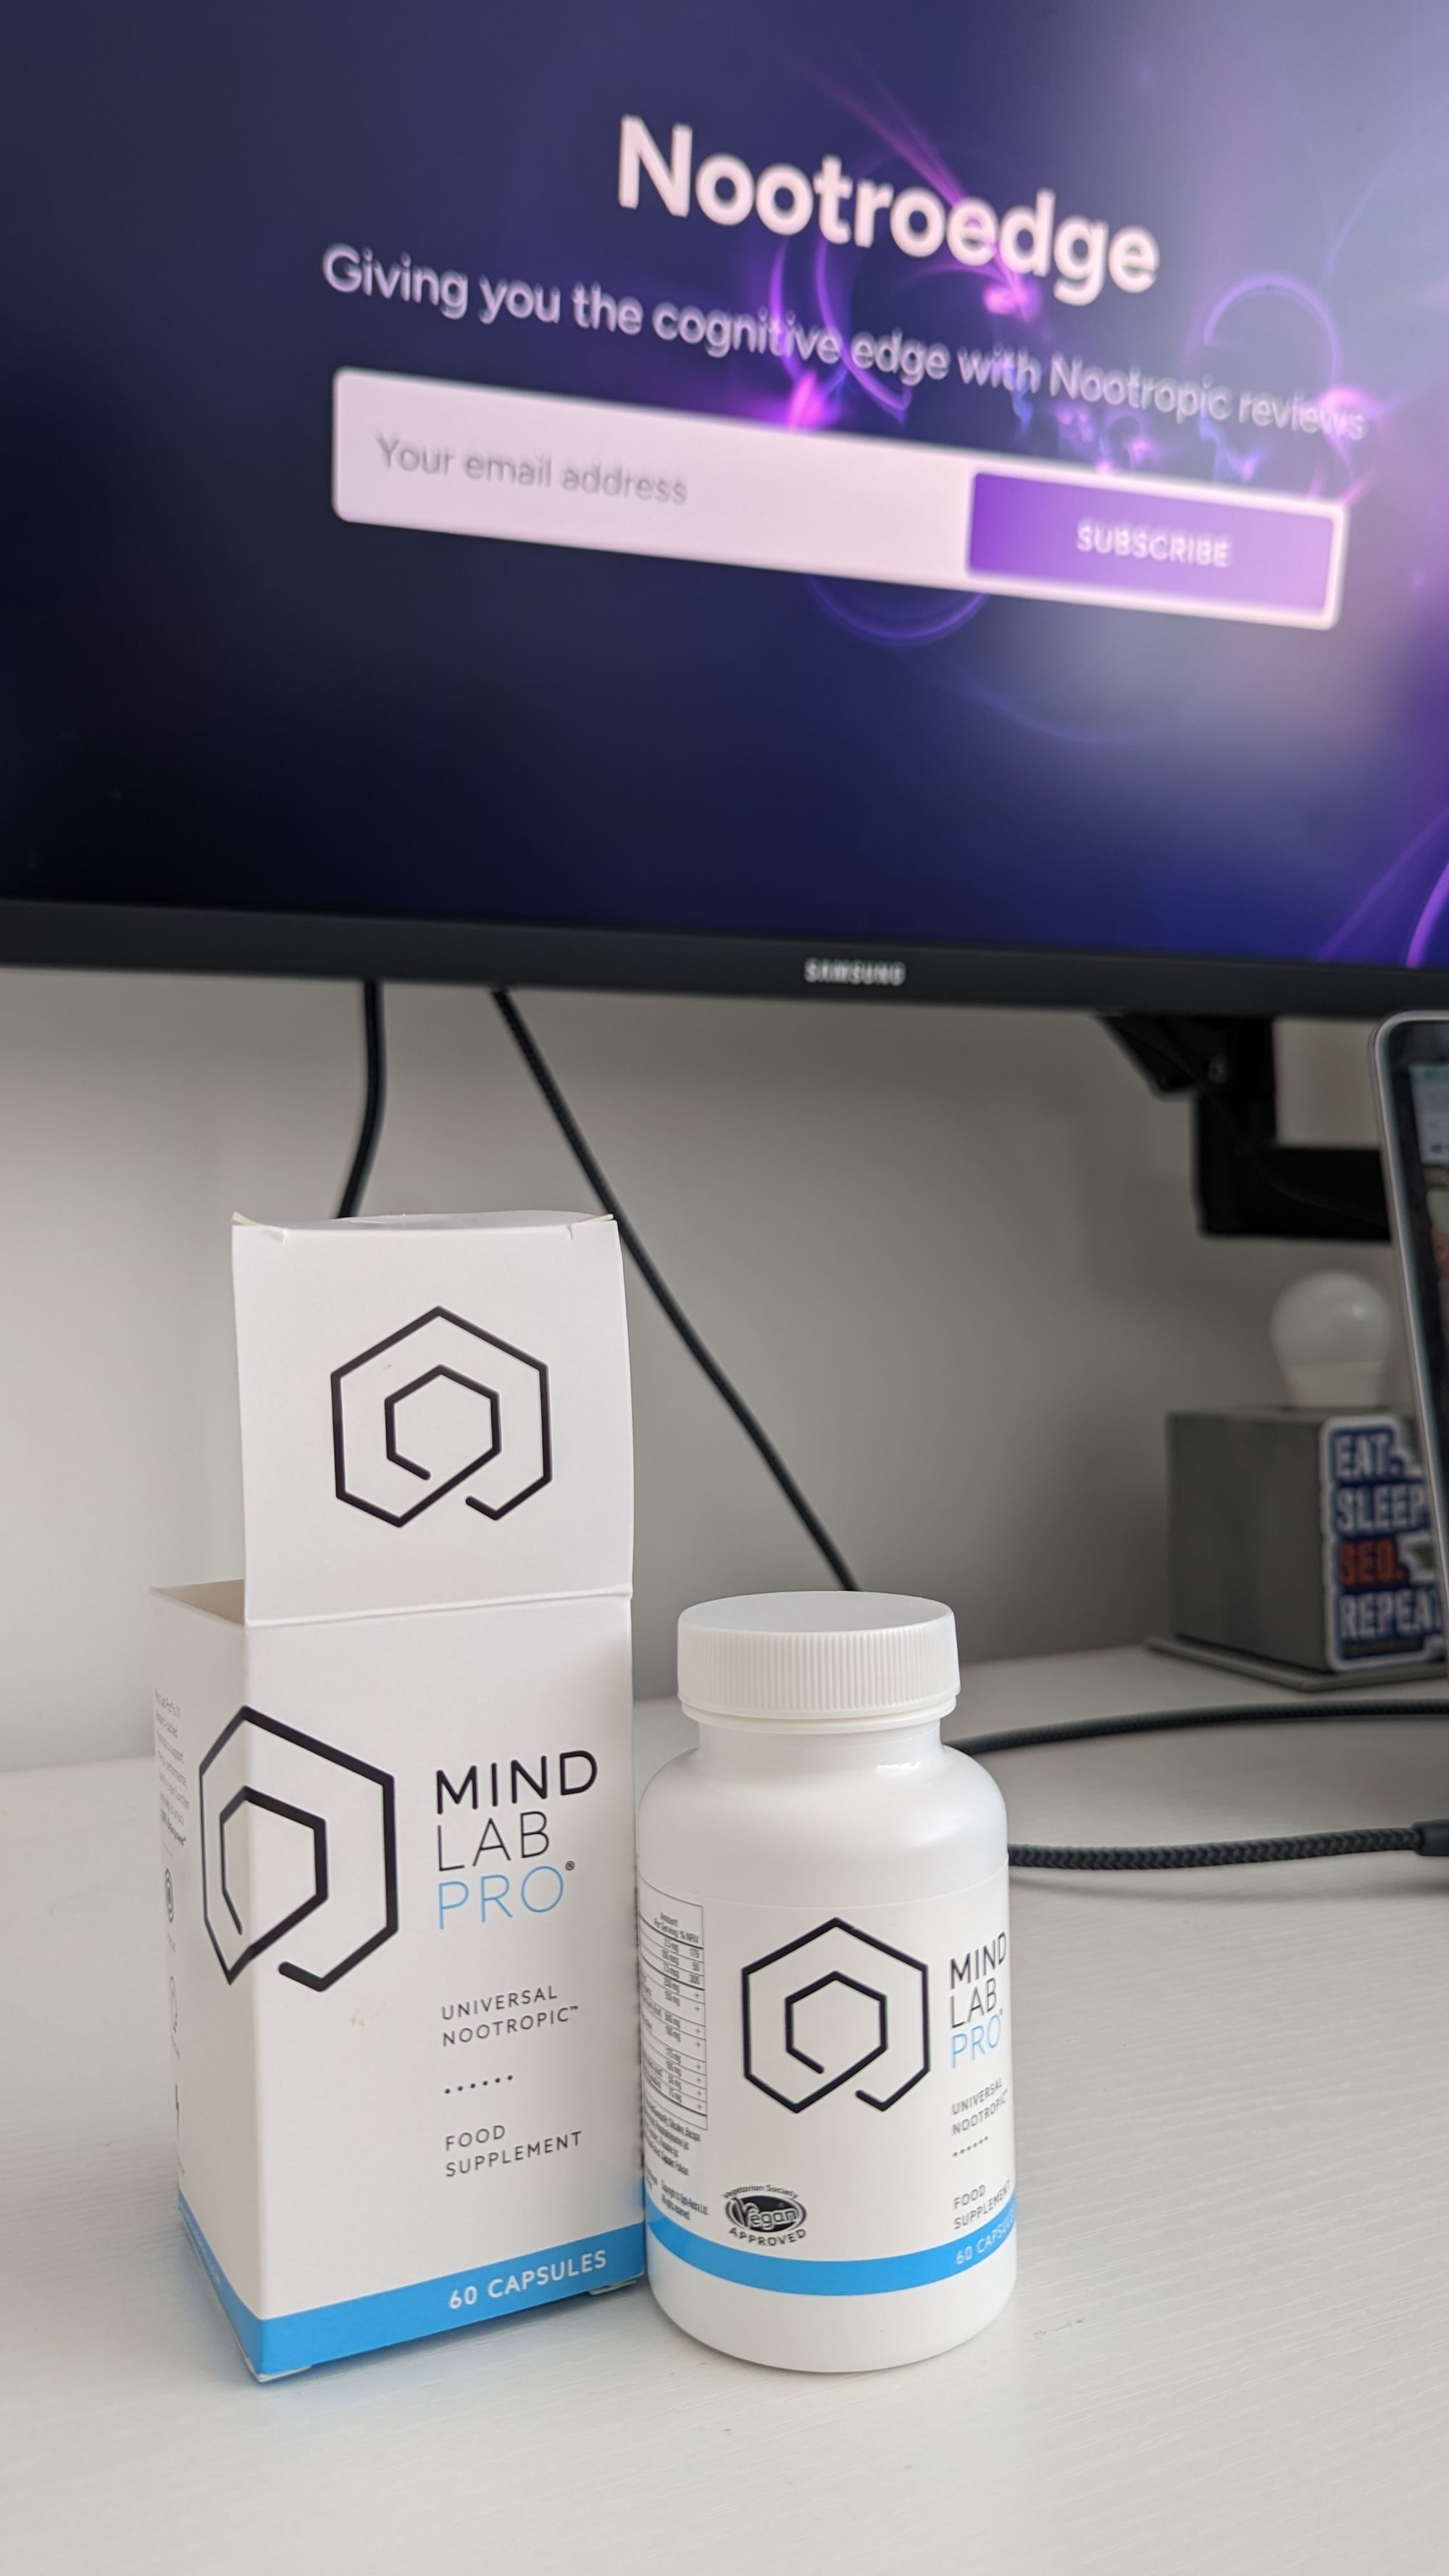 Mind Lab Pro bottle and box.